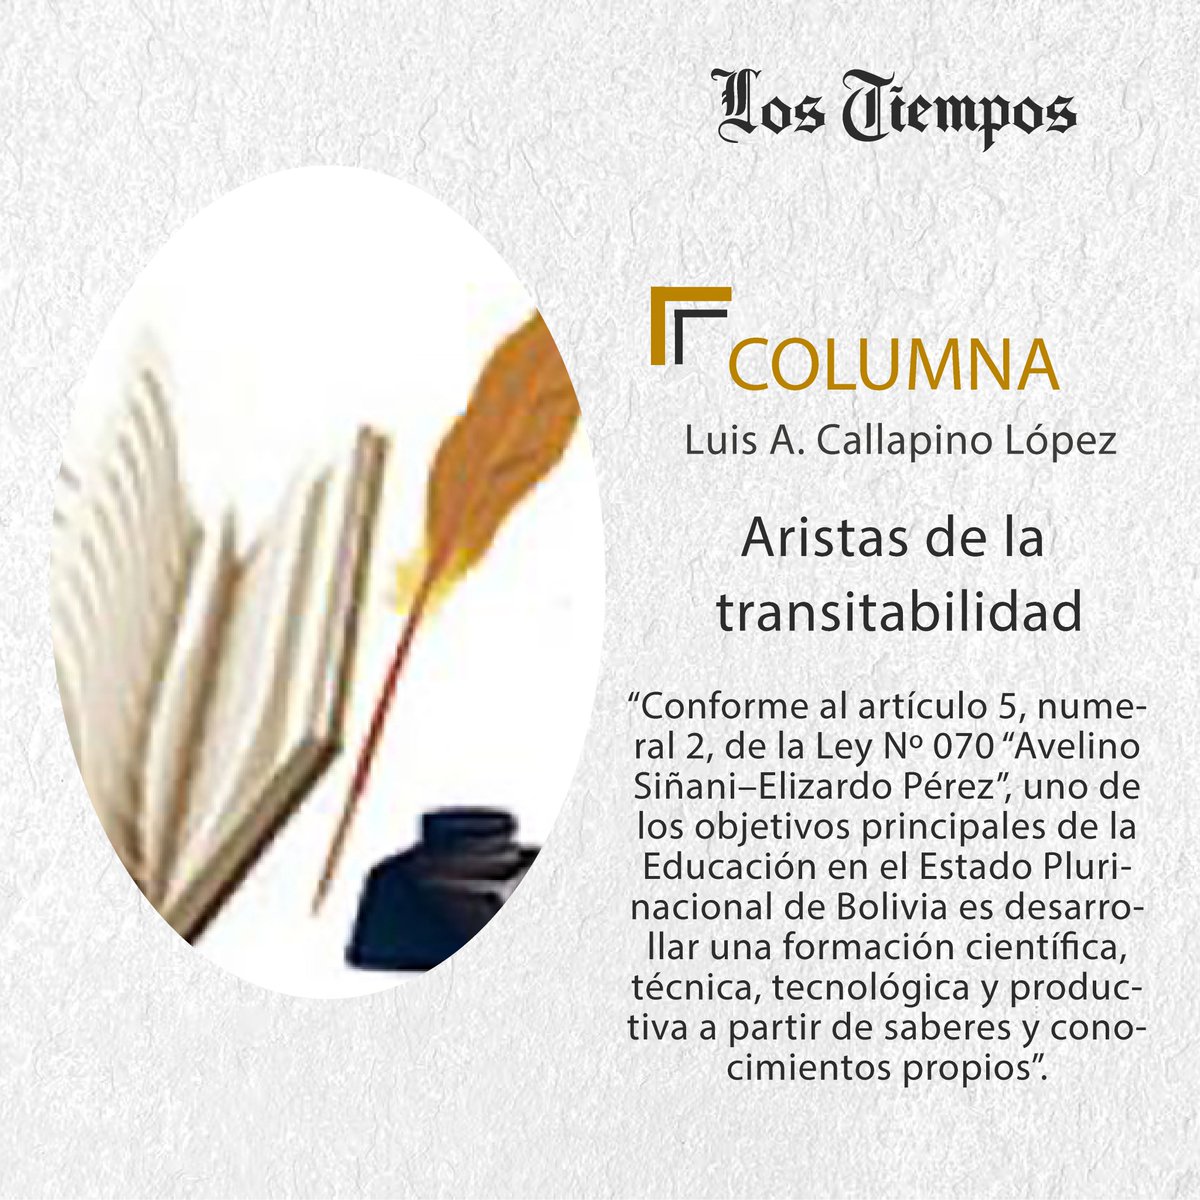 #LTColumna #Puntos de Vista
Lea la columna de Luis A. Callapino López.
👉 tinyurl.com/336bn297